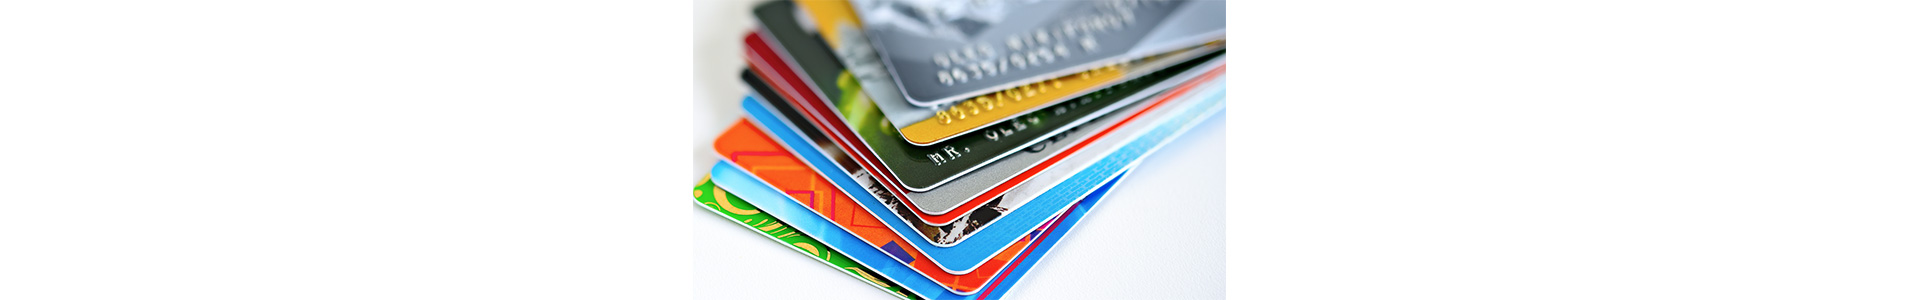 Can Making an Early Repayment of Credit Card Instalment Plan Help Saving Money? Understanding 3 Common Myths of Credit Card Repayment